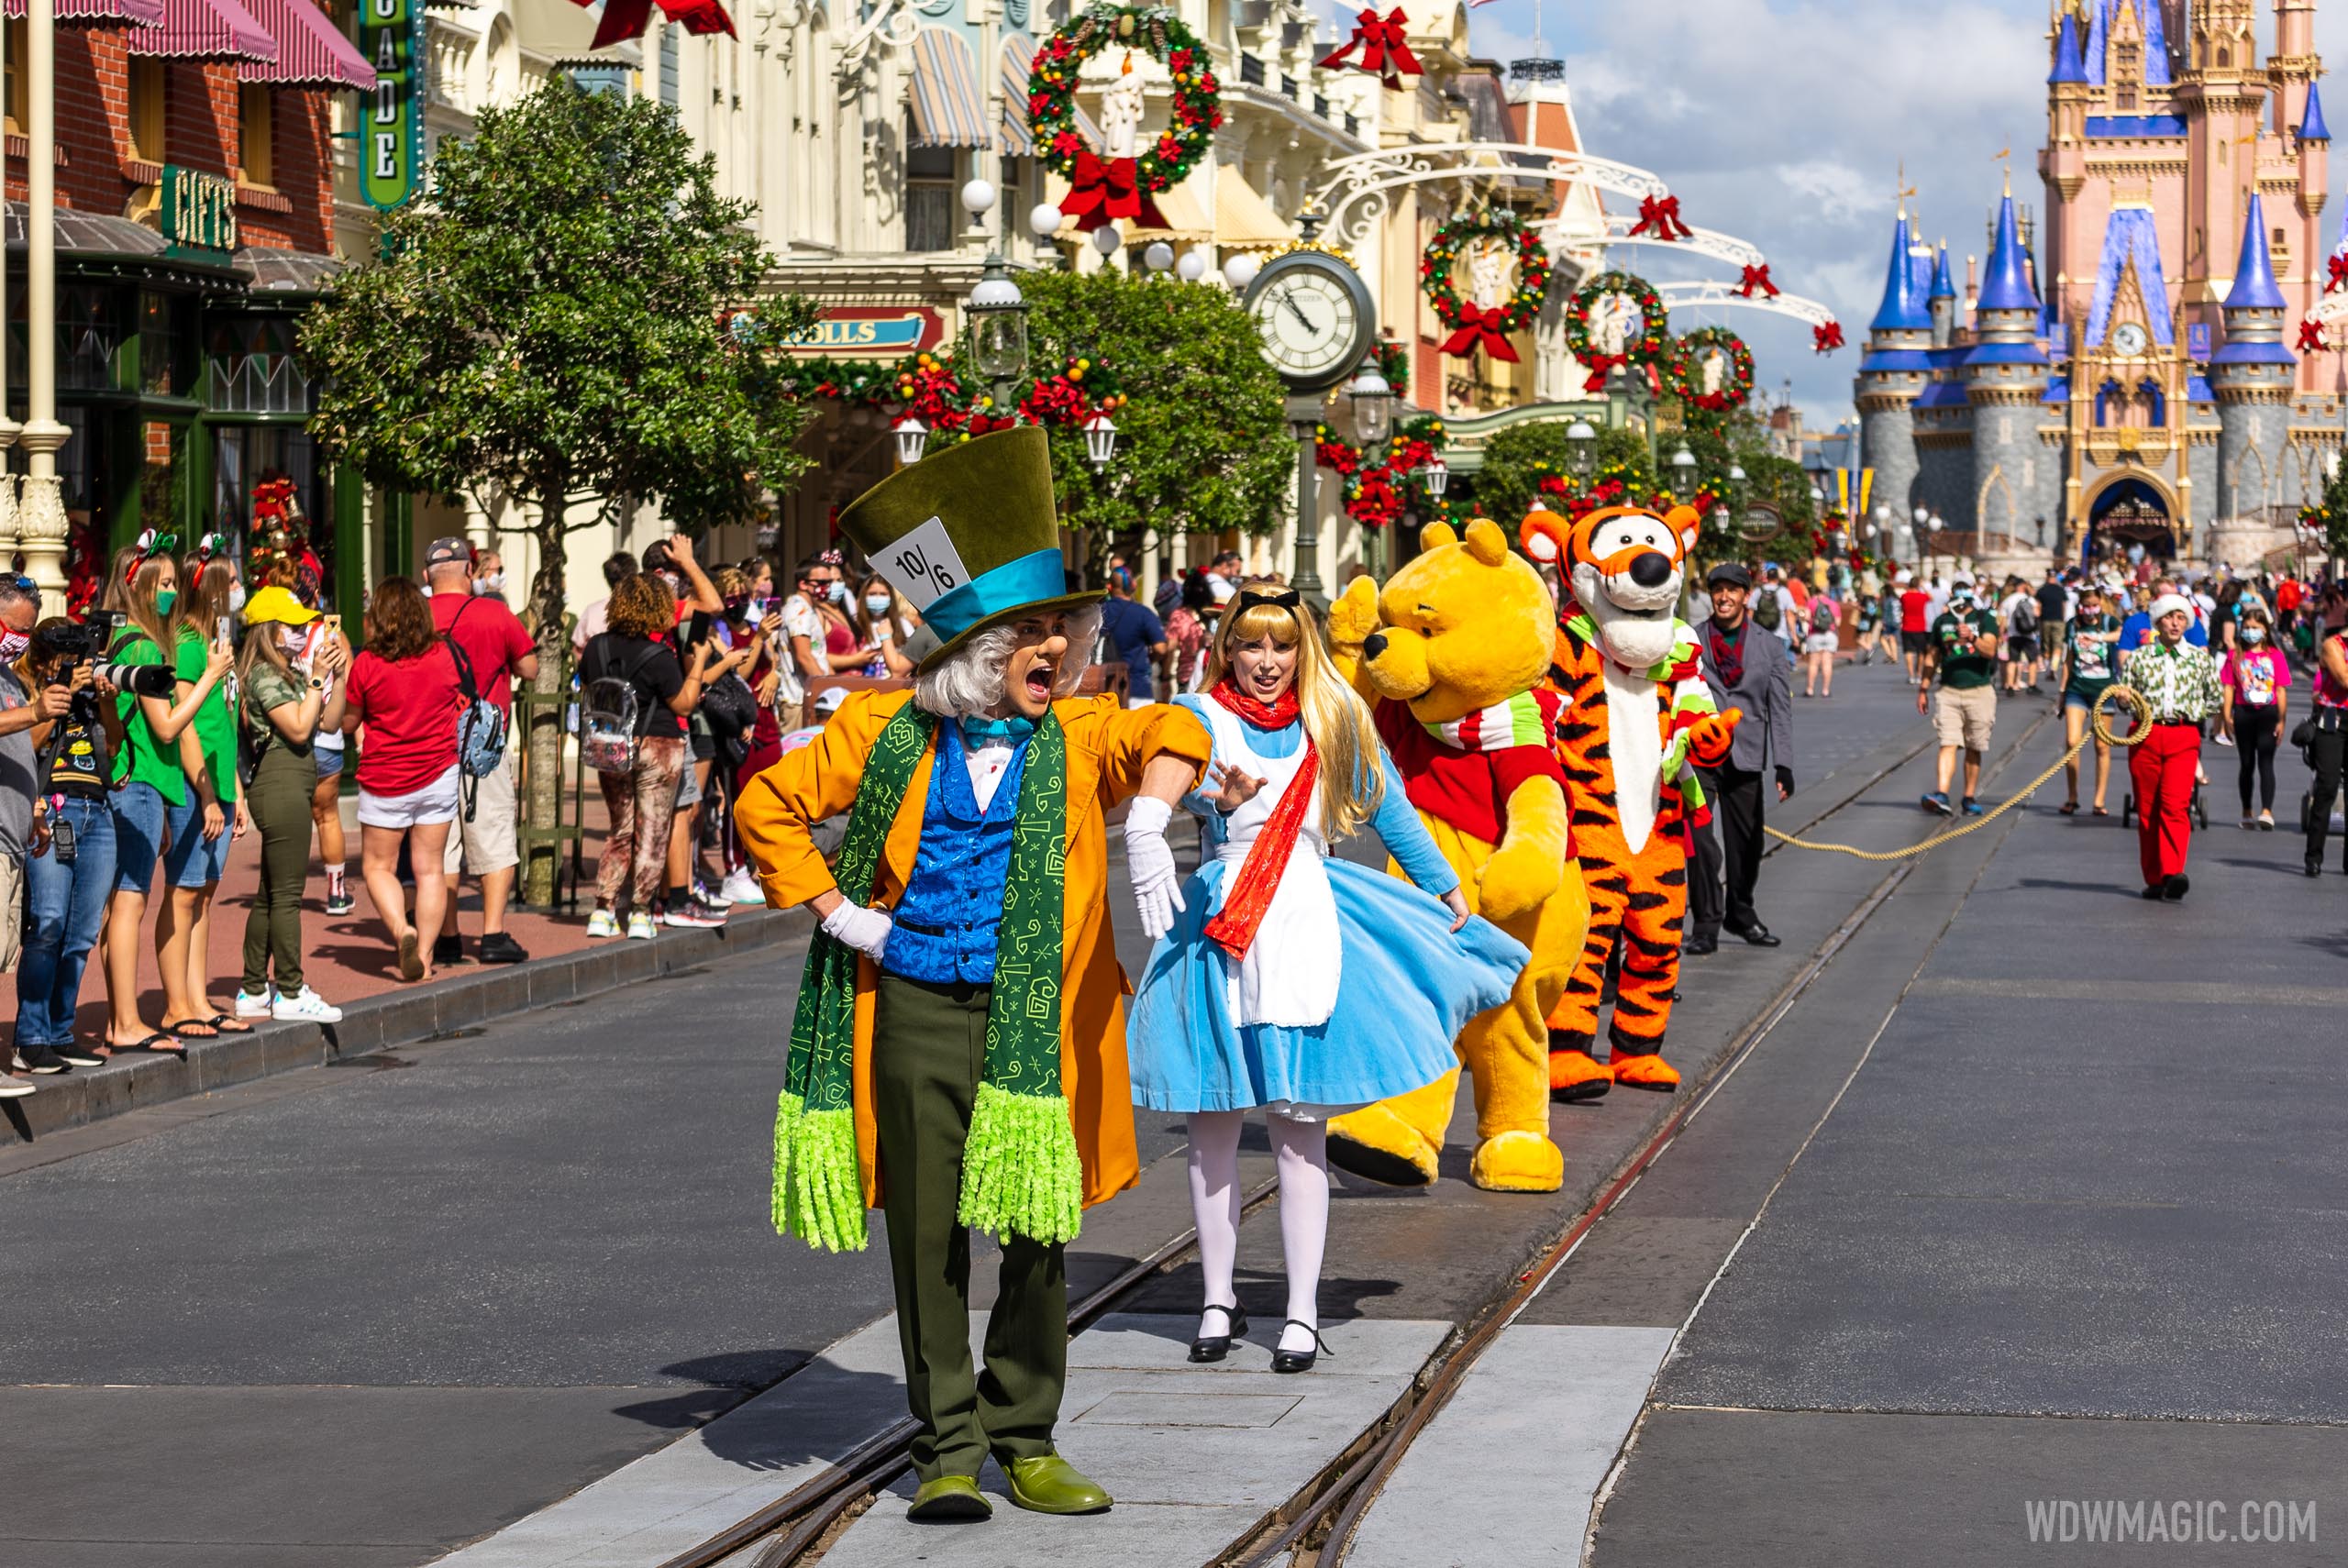 Holiday cavalcades and entertainment at the Magic Kingdom 2020